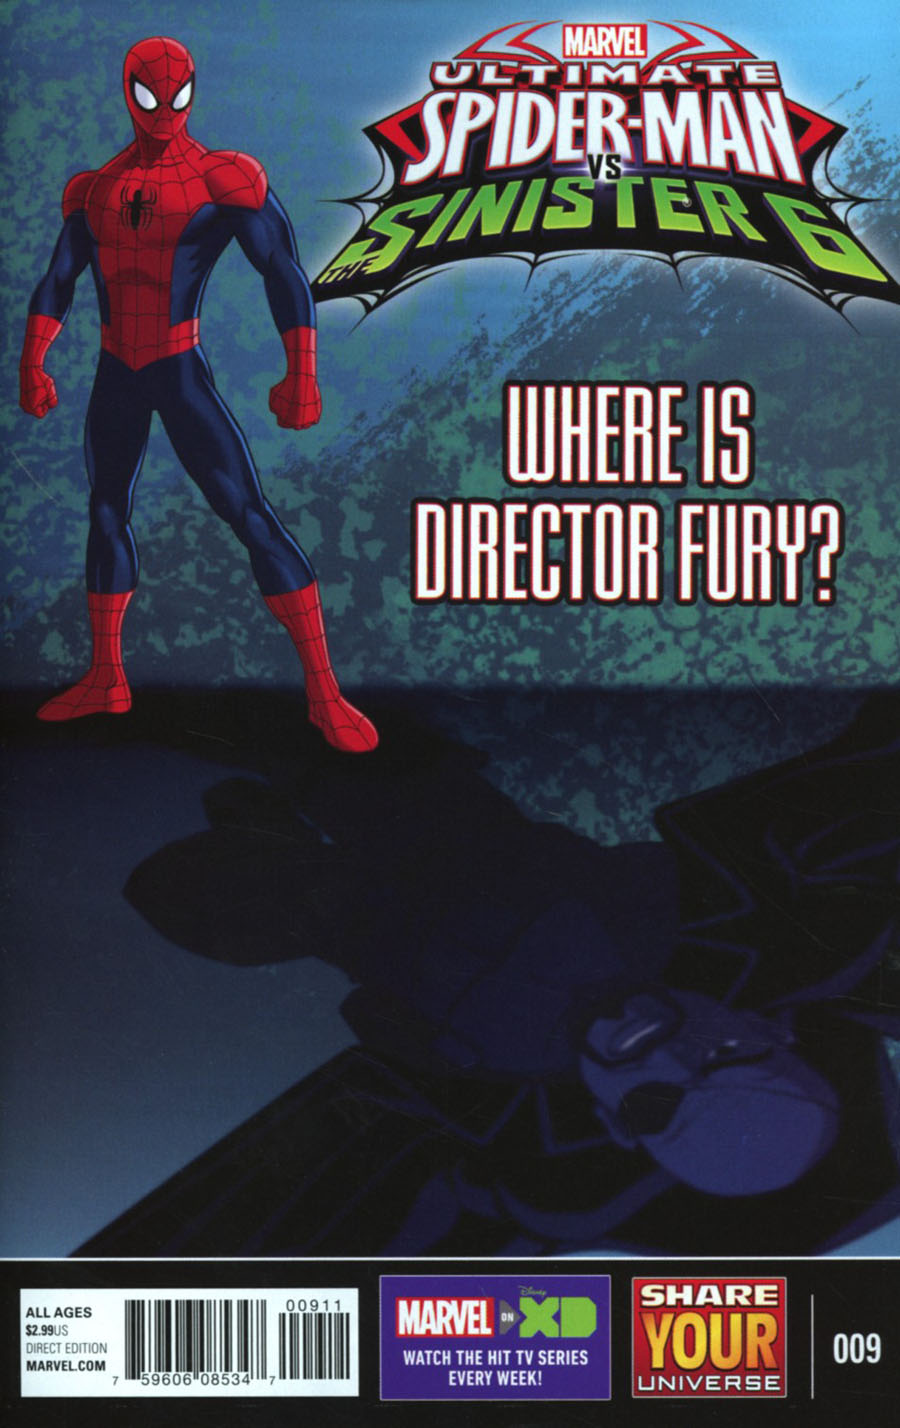 Marvel Universe Ultimate Spider-Man vs Sinister Six #9